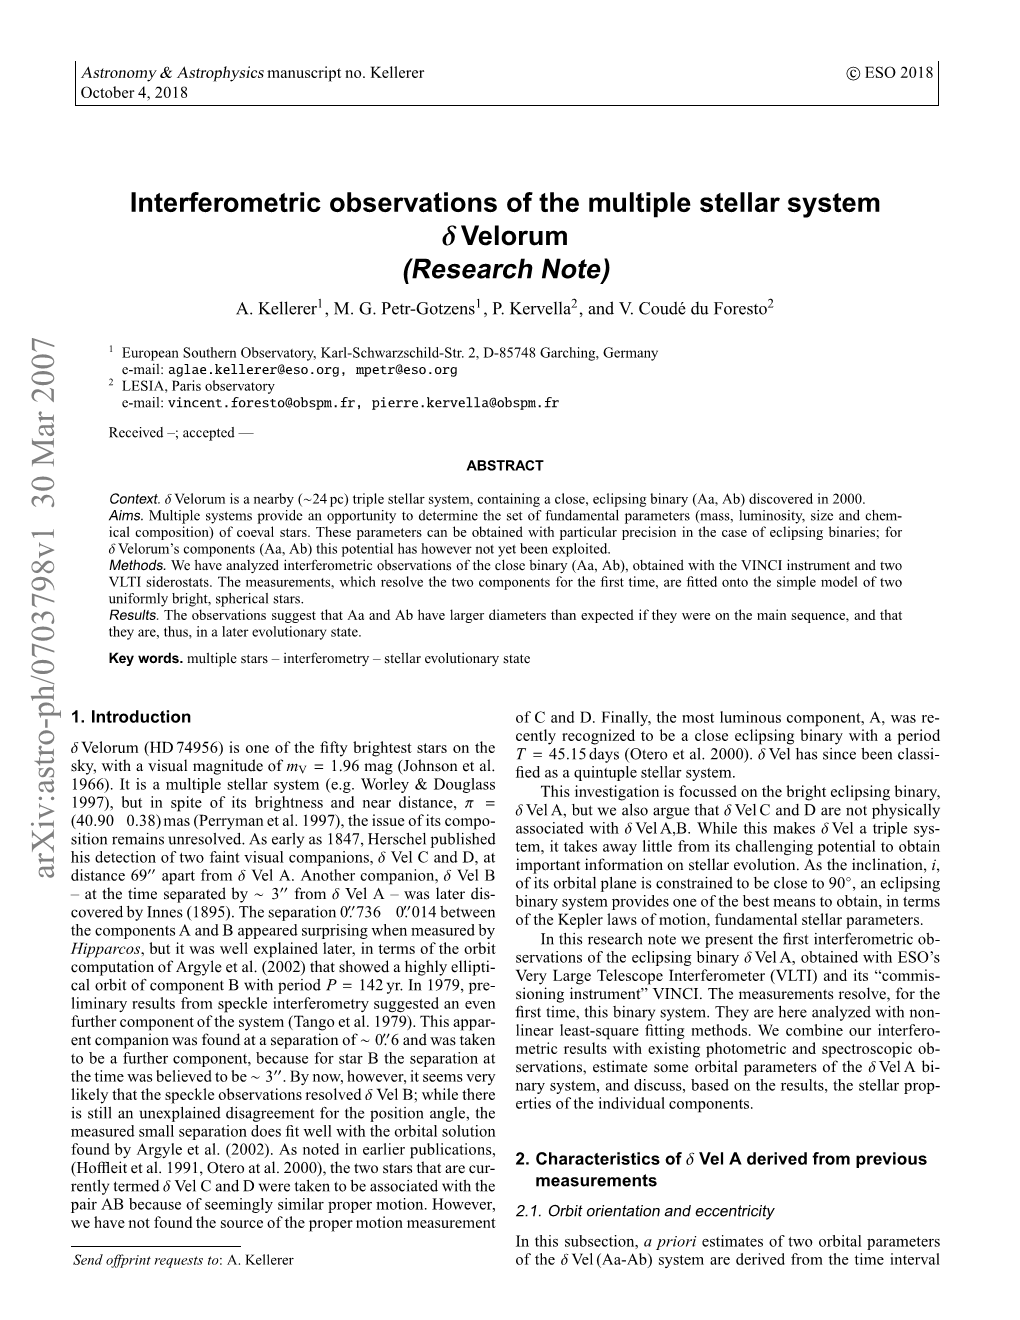 Interferometric Observations of the Multiple Stellar System Delta Velorum